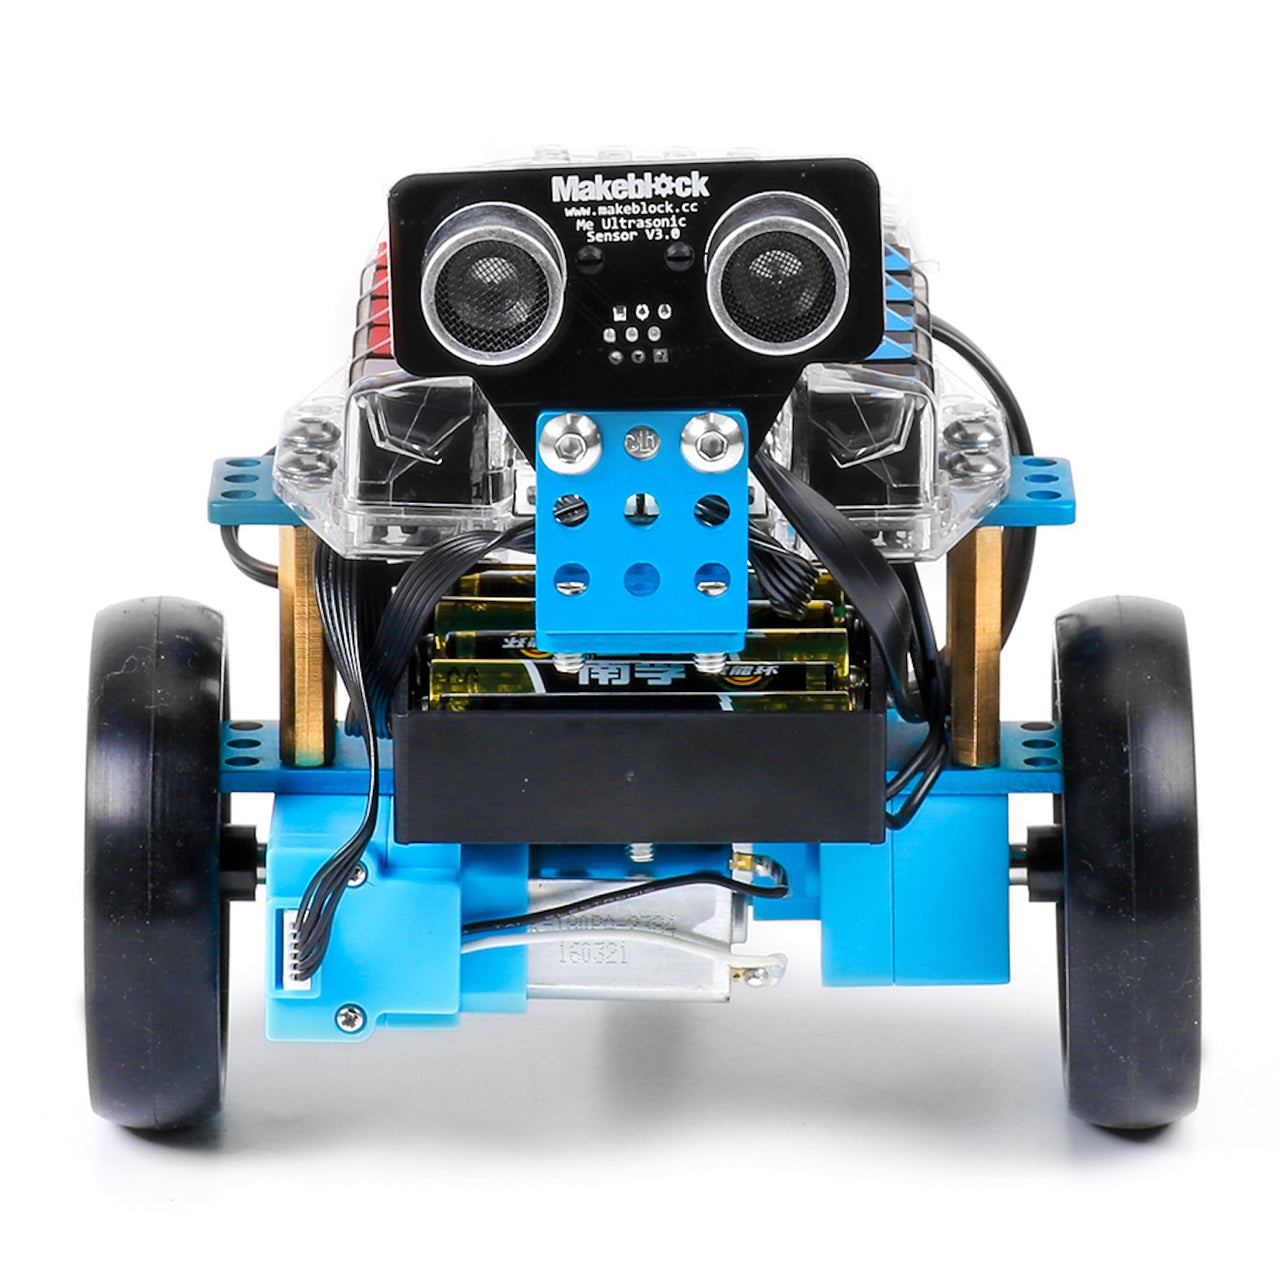 mbot ranger - transformable stem educational robot kit (bluetooth version)